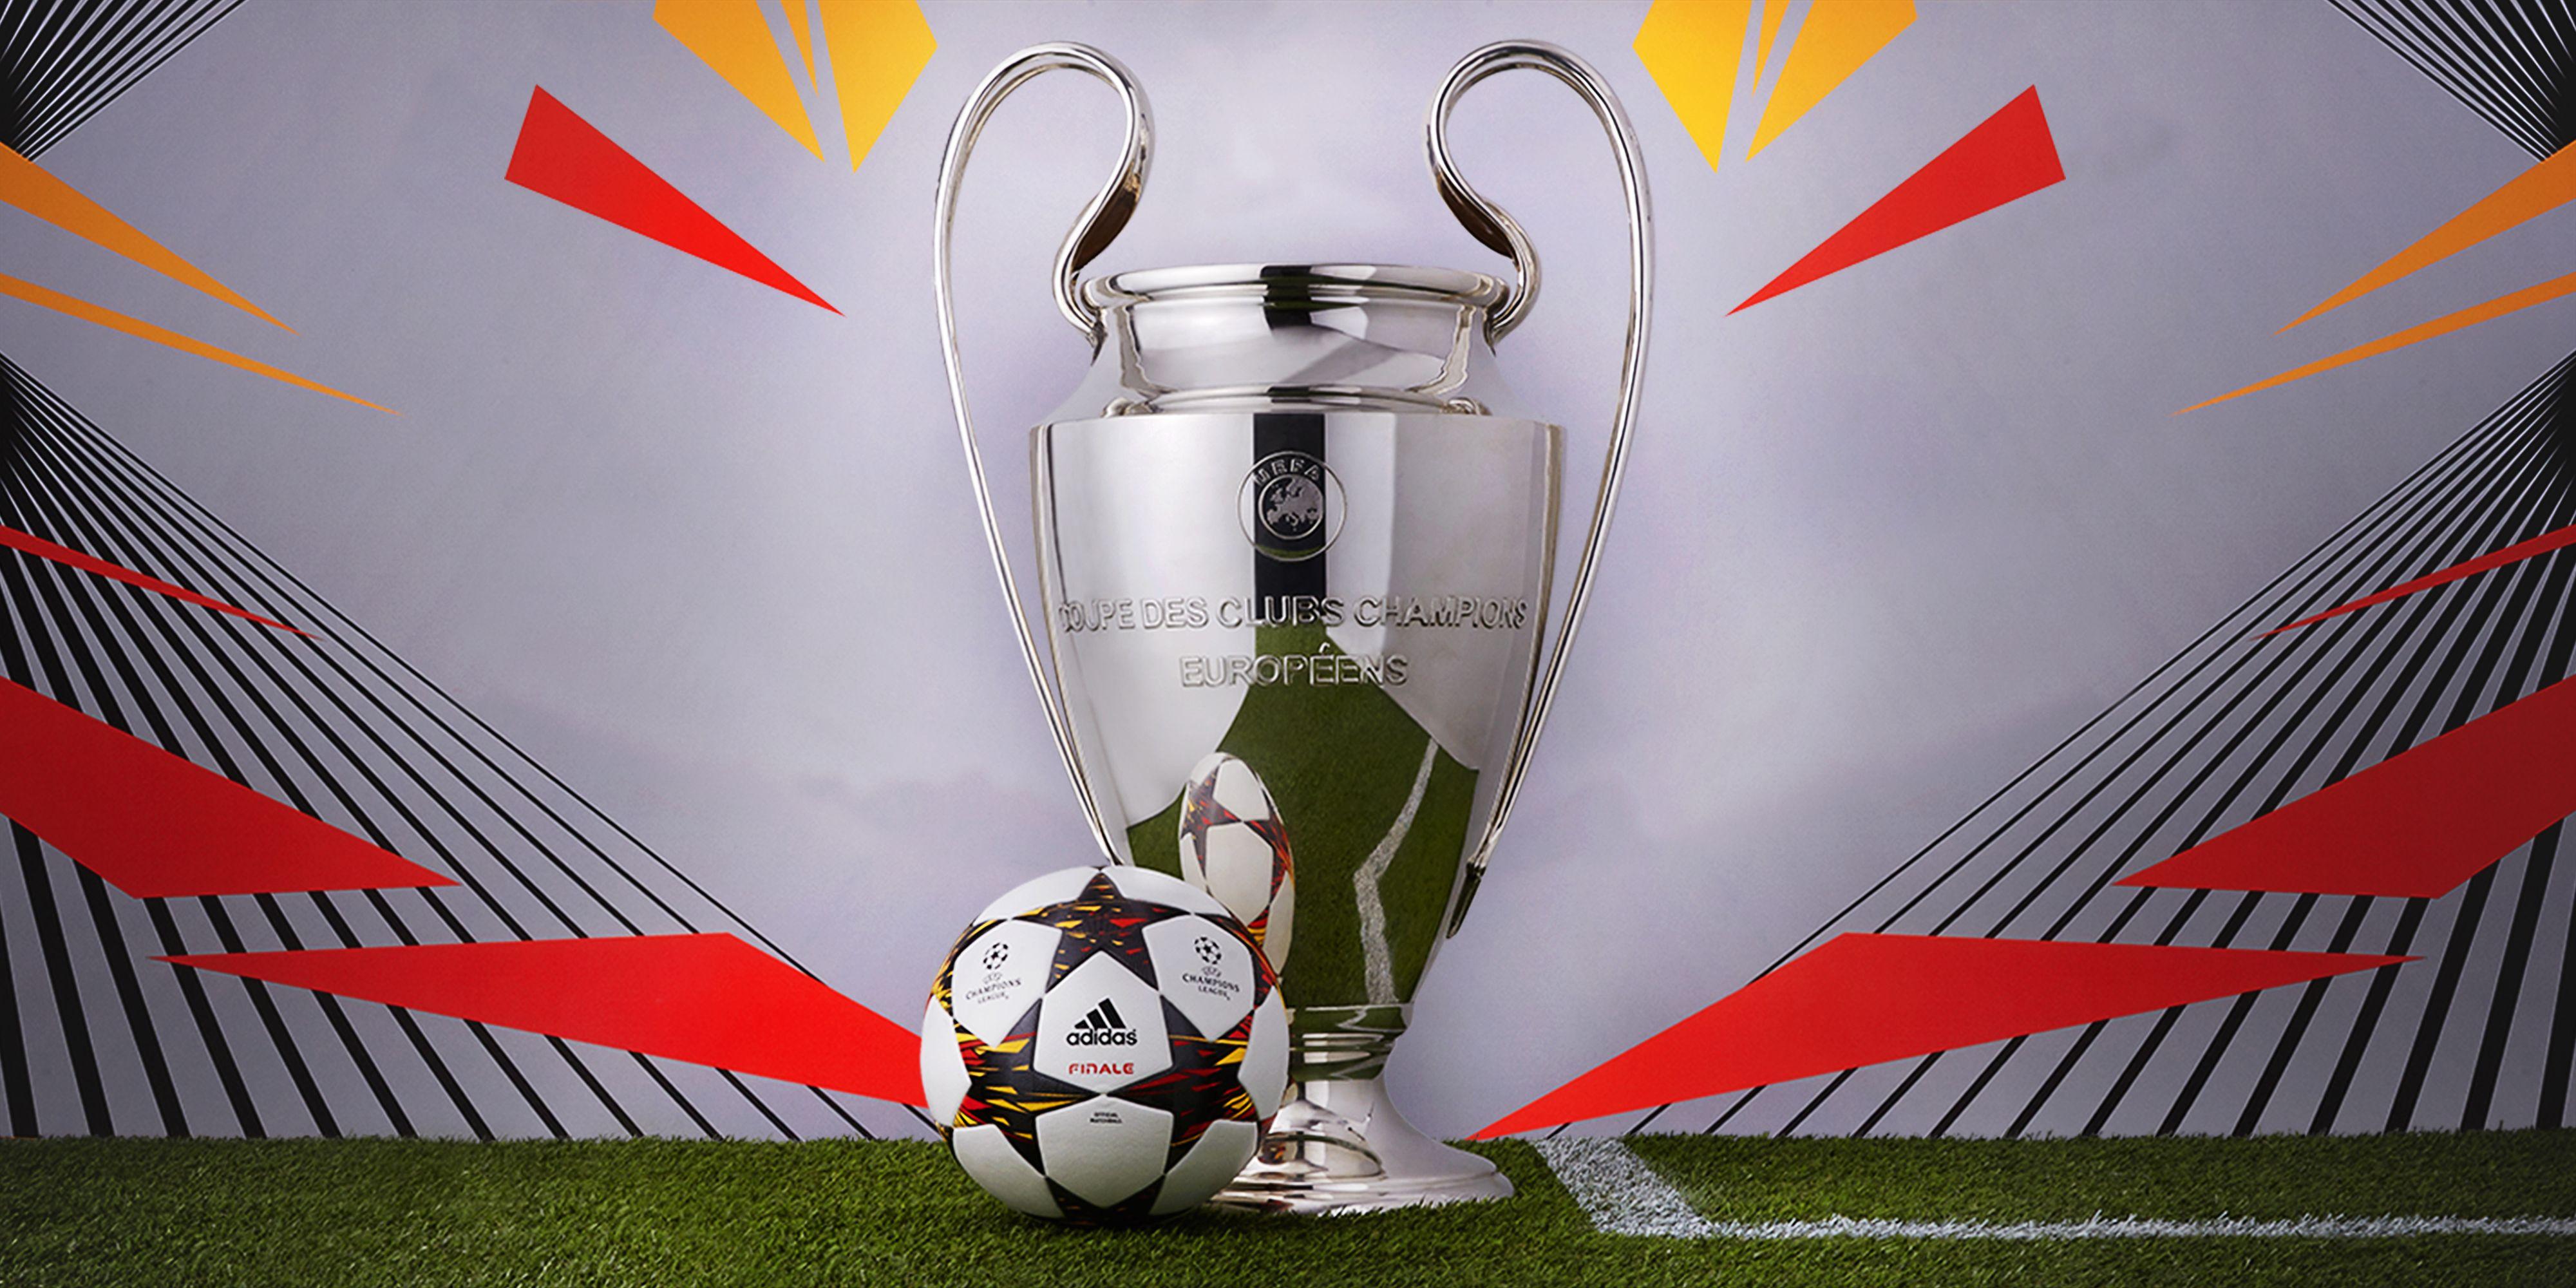 UEFA champions league ball. The 12elfth Man